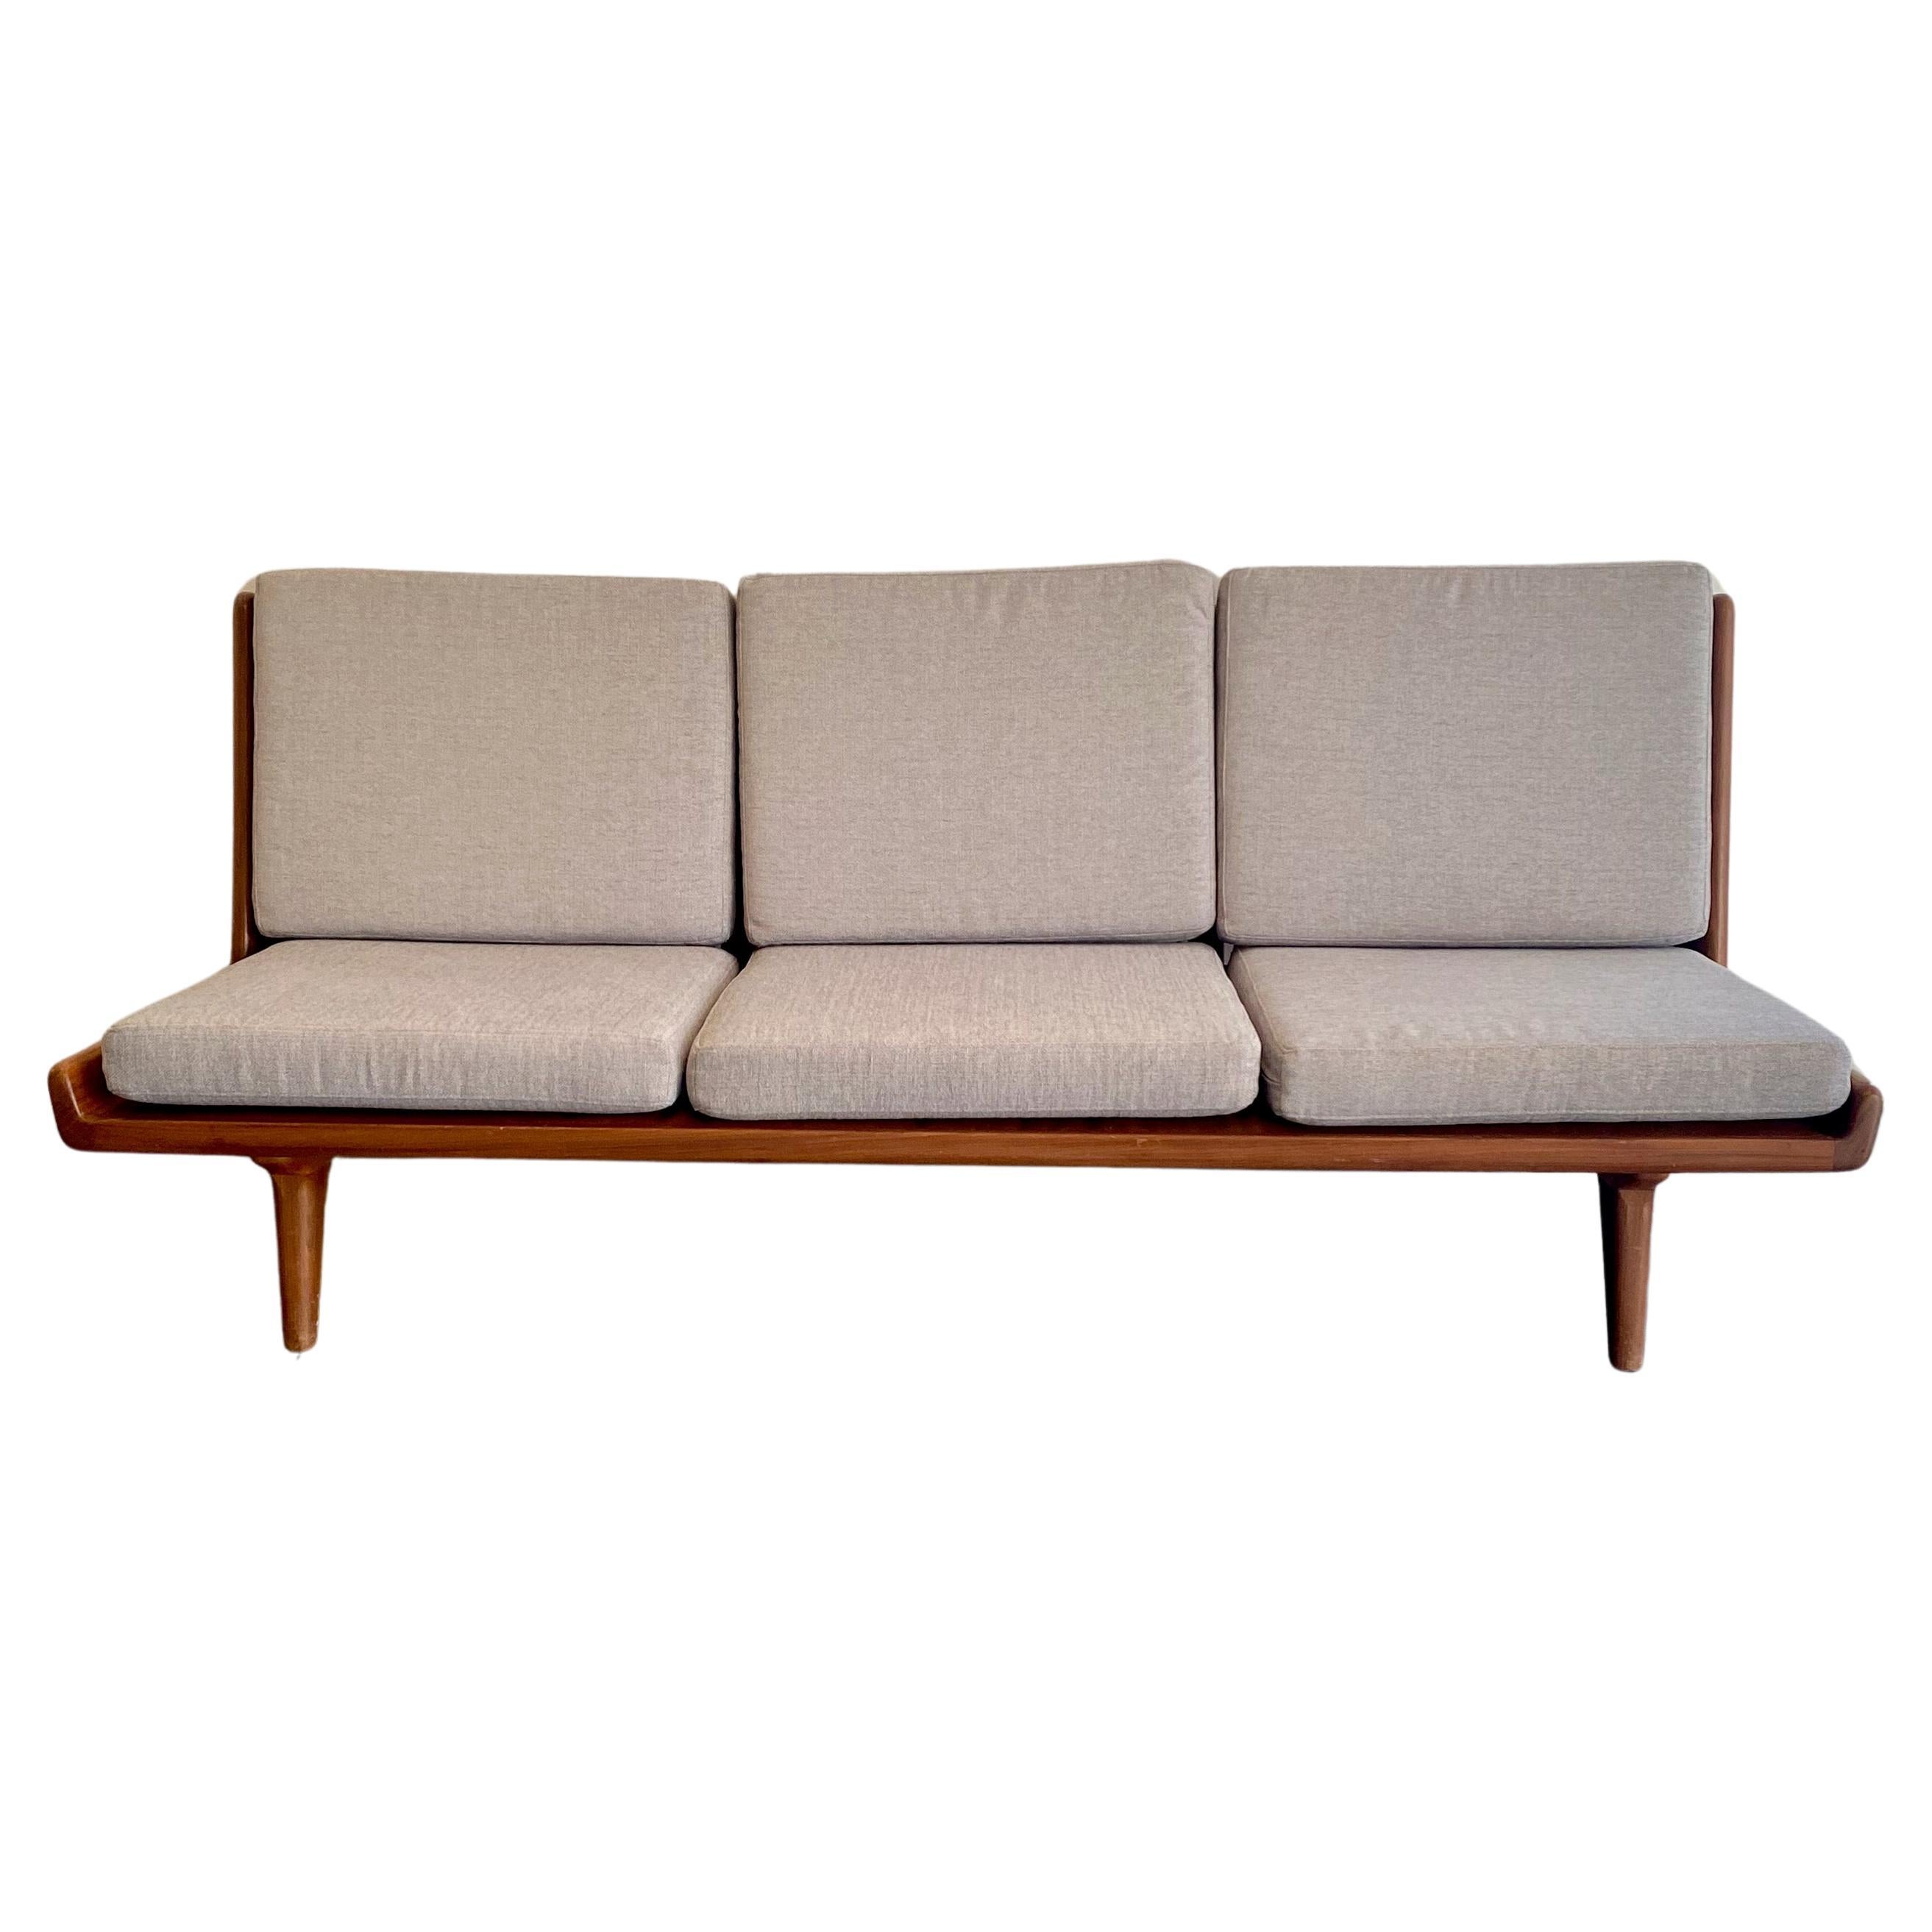 Studio sofa by Carl Gustaf Hiort af Ornäs (Skandinavische Moderne) im Angebot